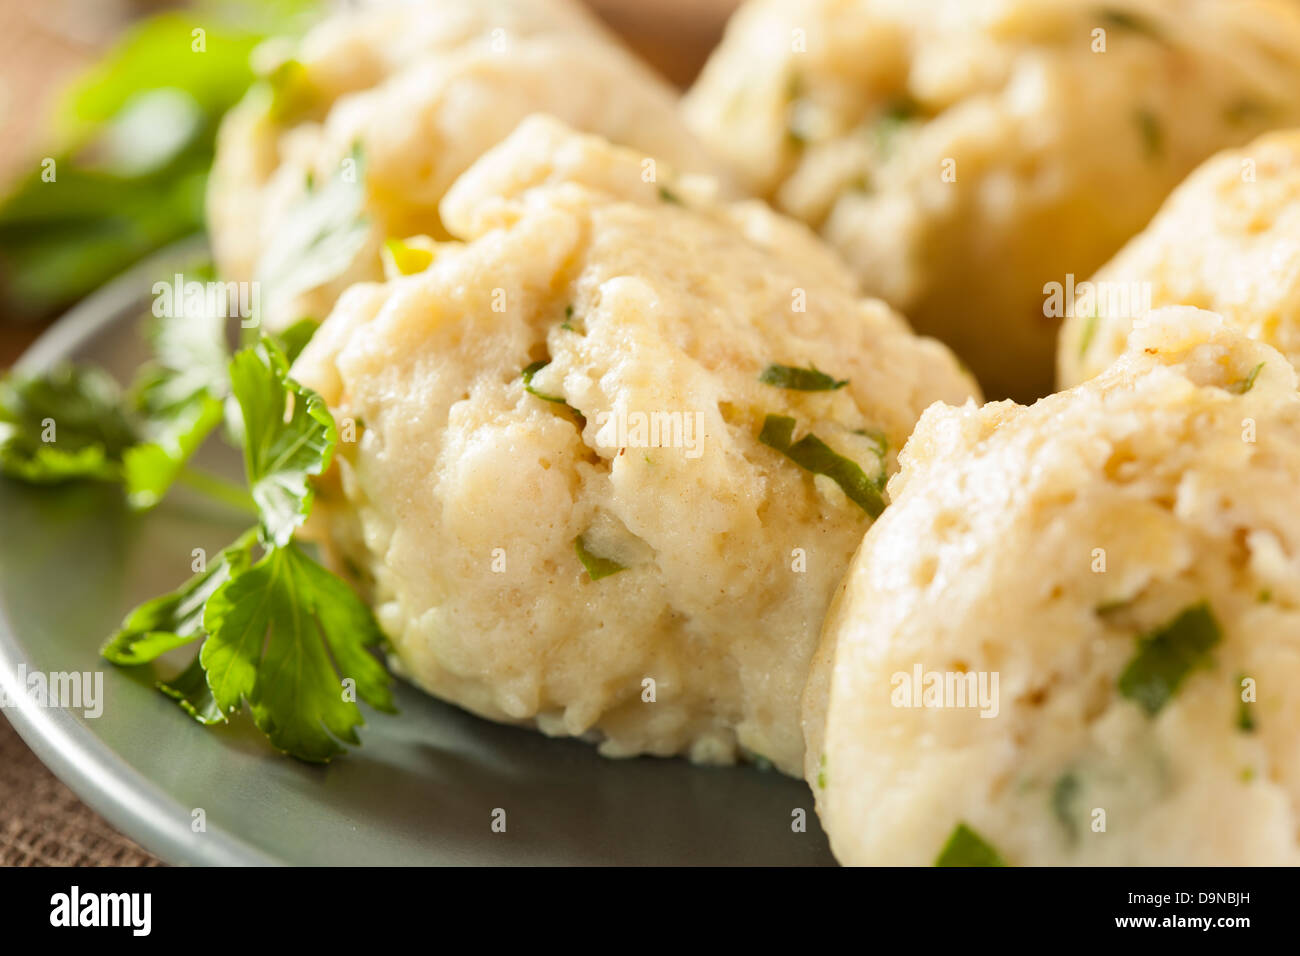 Homemade Matzo Ball Dumplings with Parsley for passover Stock Photo